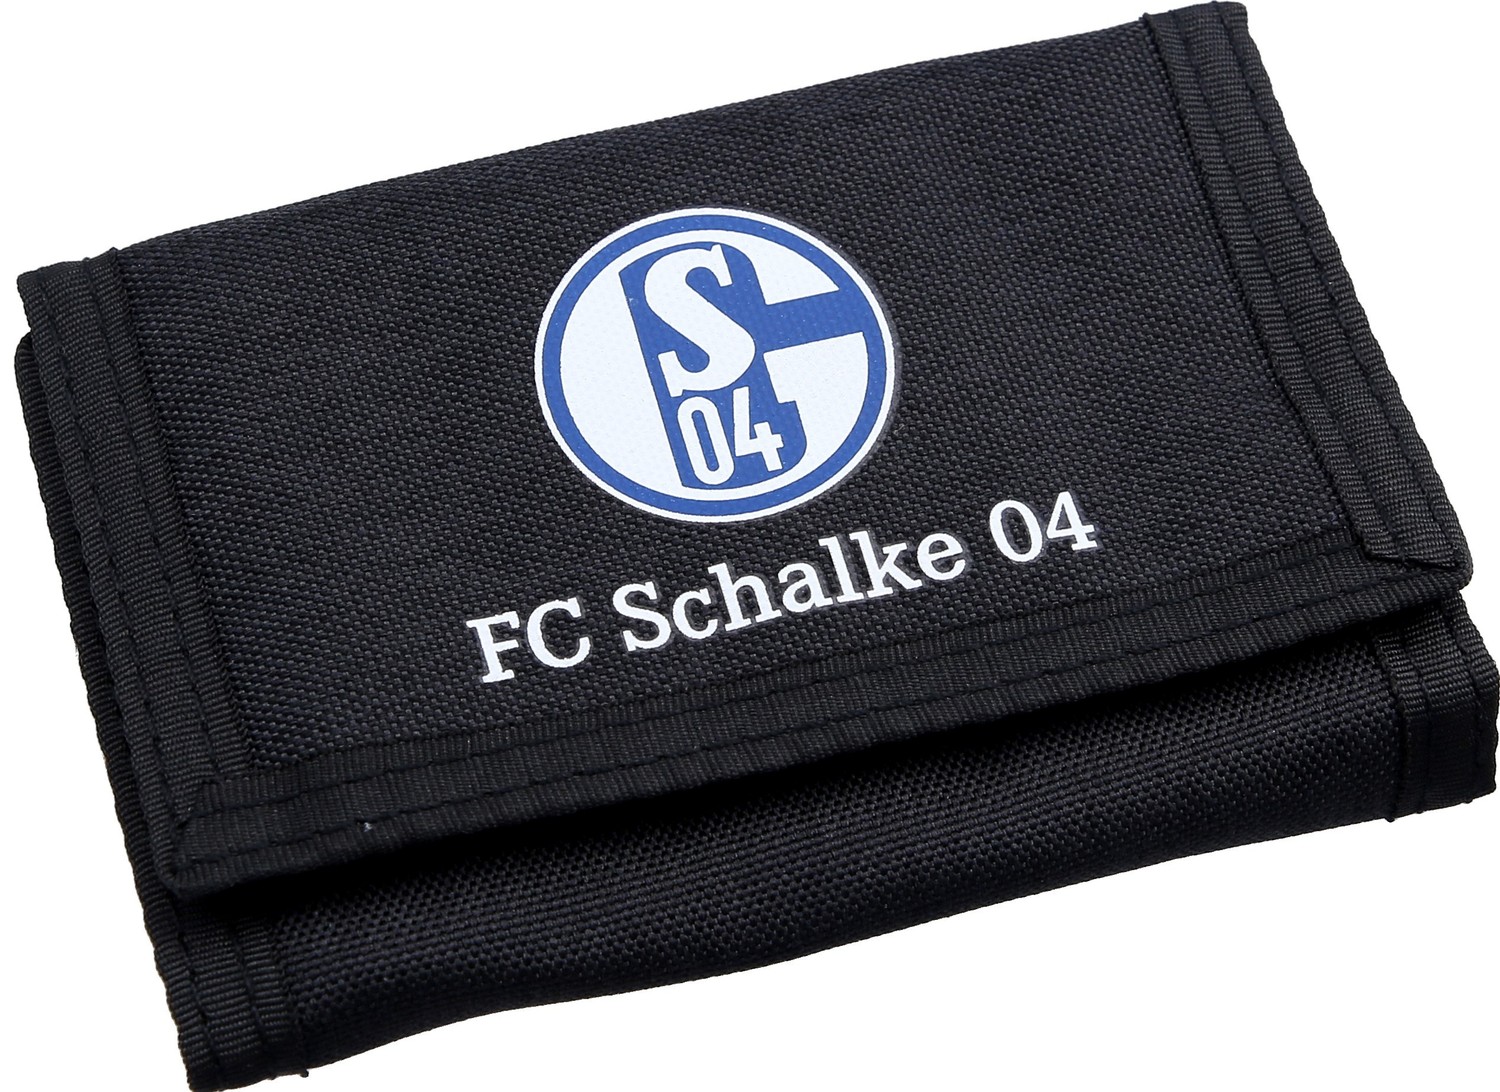 FC Schalke 04 Geldbeutel umbro Geldbörse Portmonee NEU 